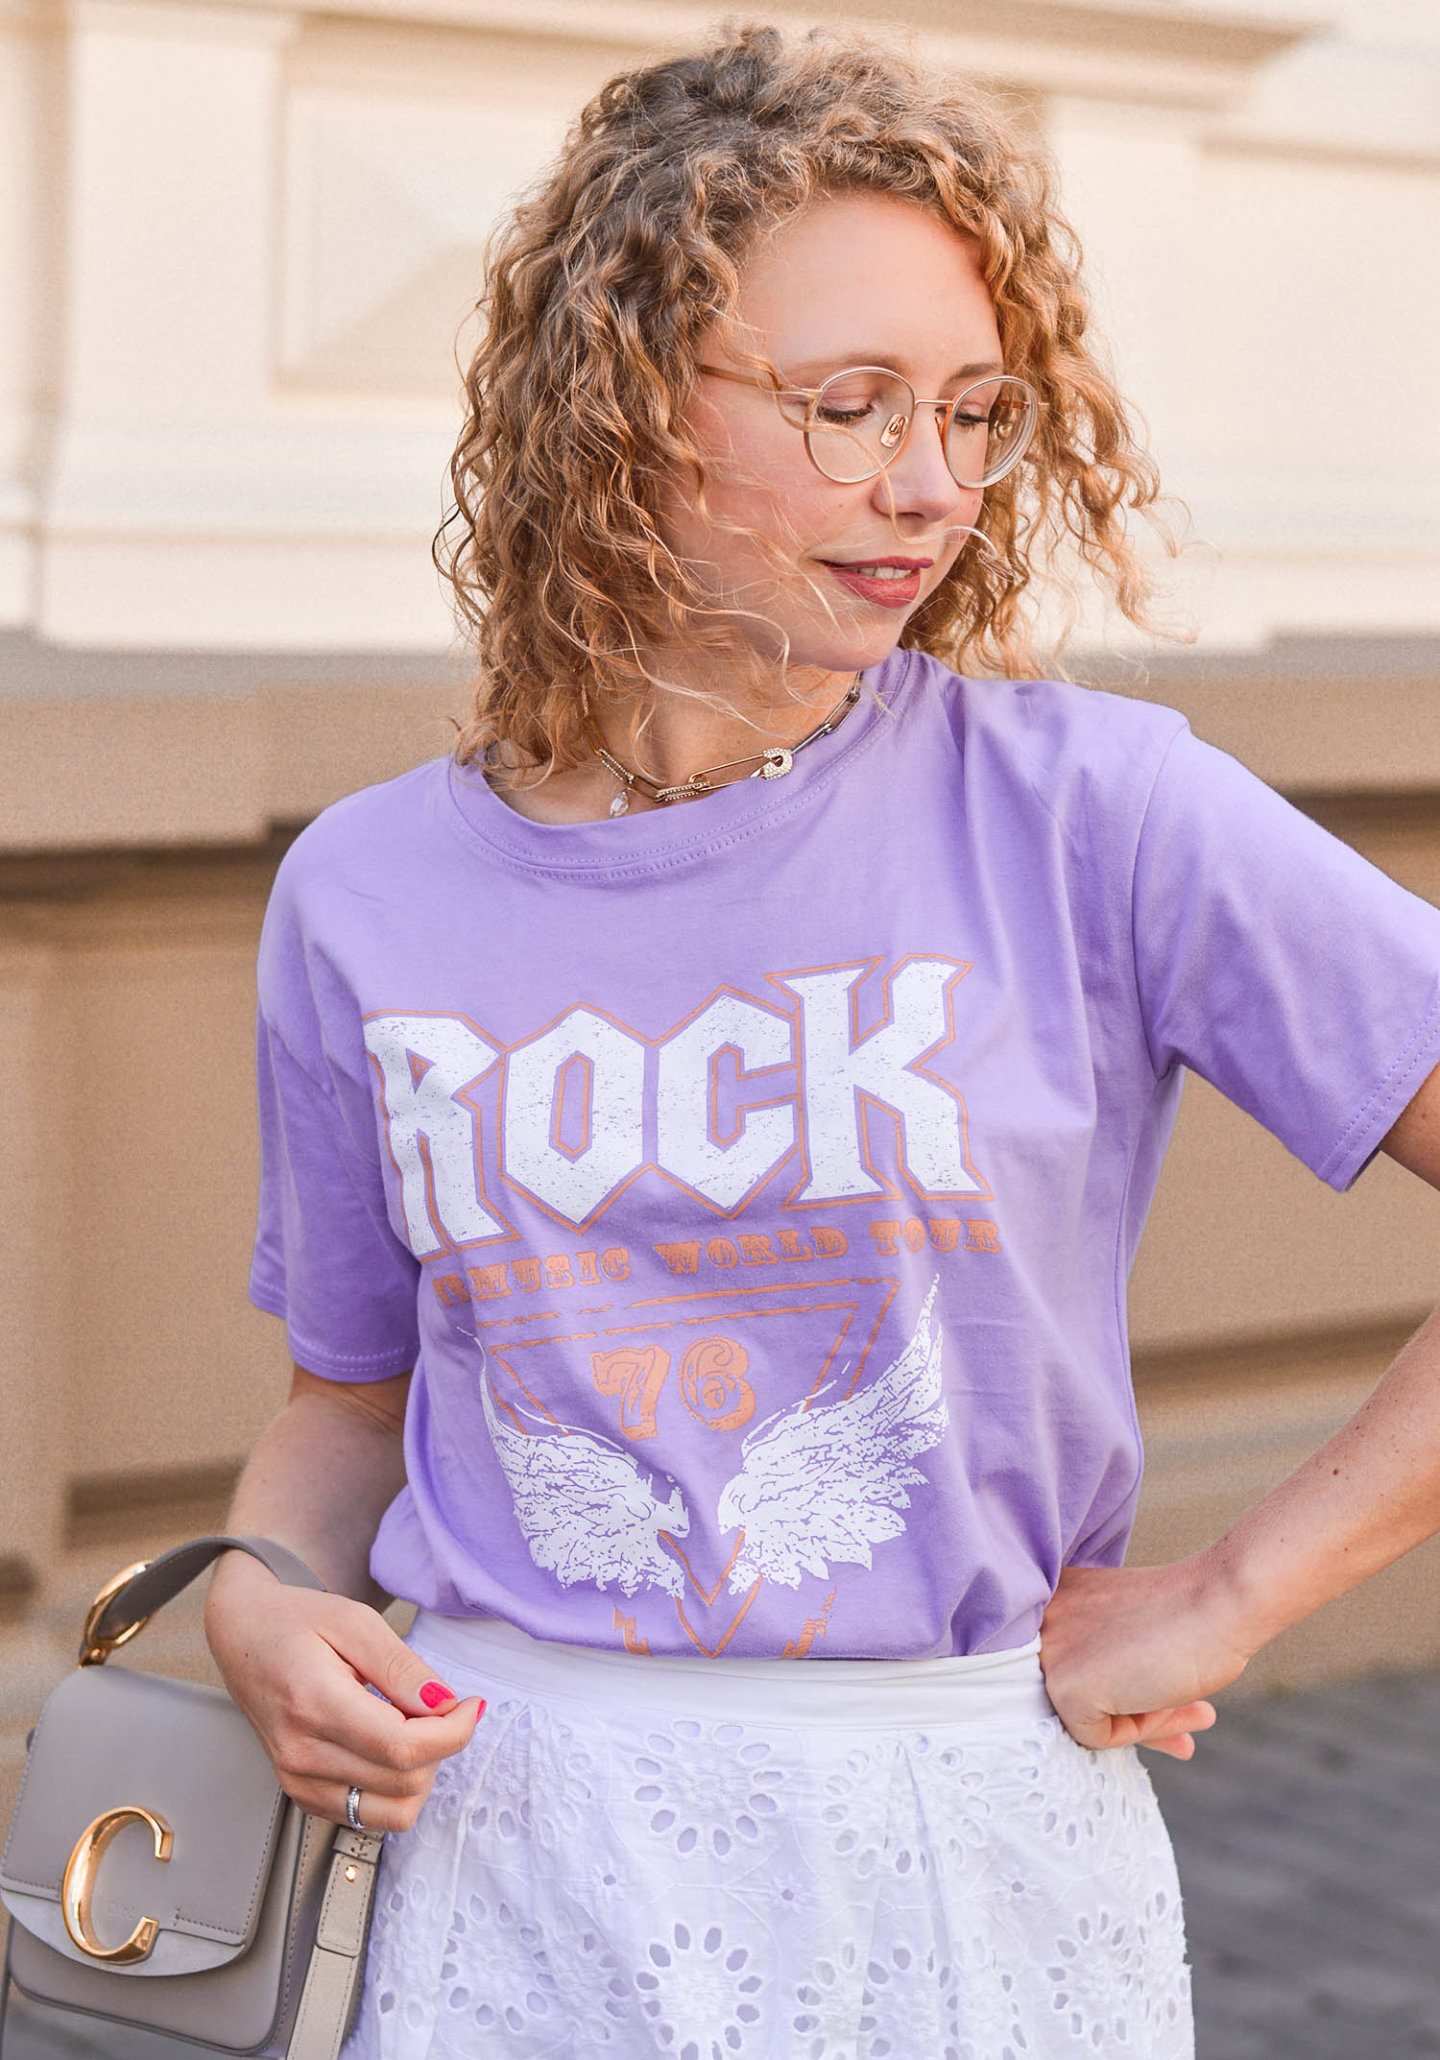 rock-shirt in trendfarbe flieder